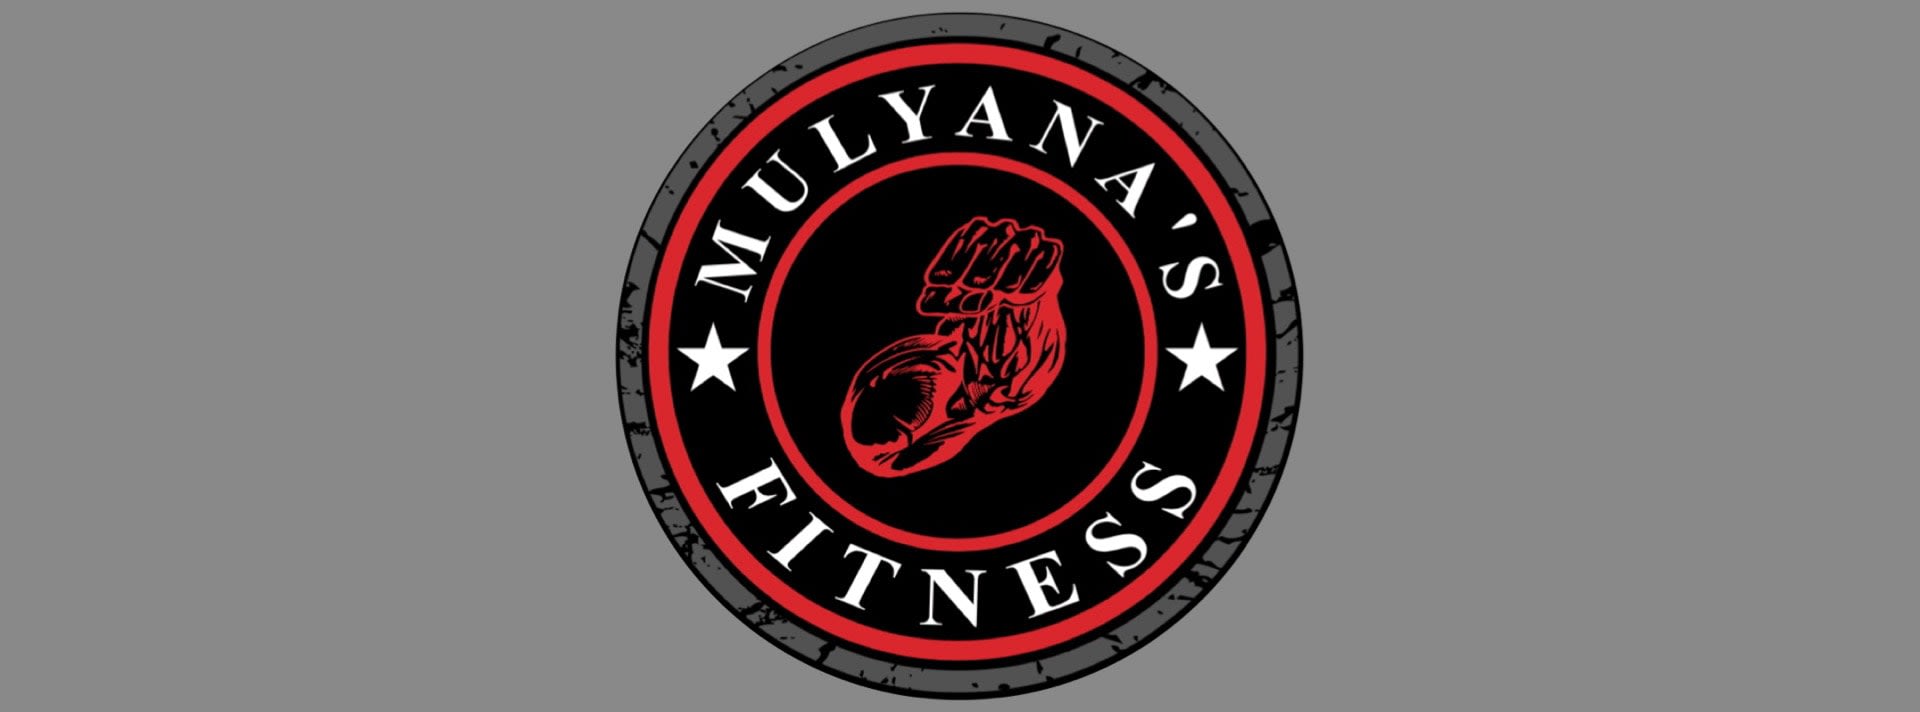 Mulyana's Fitness